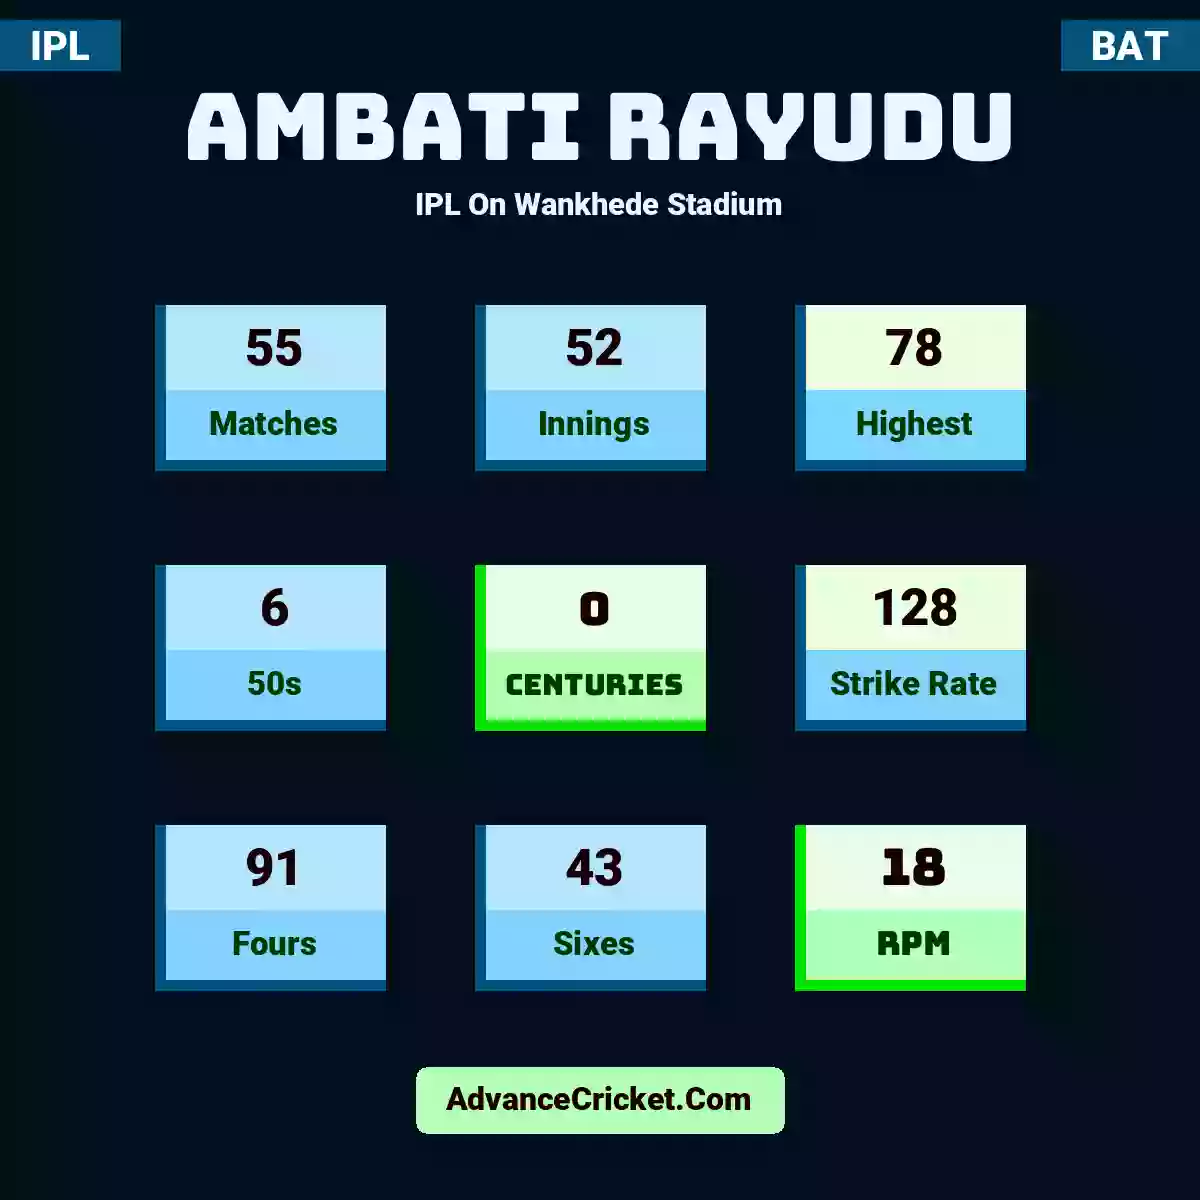 Ambati Rayudu IPL  On Wankhede Stadium, Ambati Rayudu played 55 matches, scored 78 runs as highest, 6 half-centuries, and 0 centuries, with a strike rate of 128. A.Rayudu hit 91 fours and 43 sixes, with an RPM of 18.